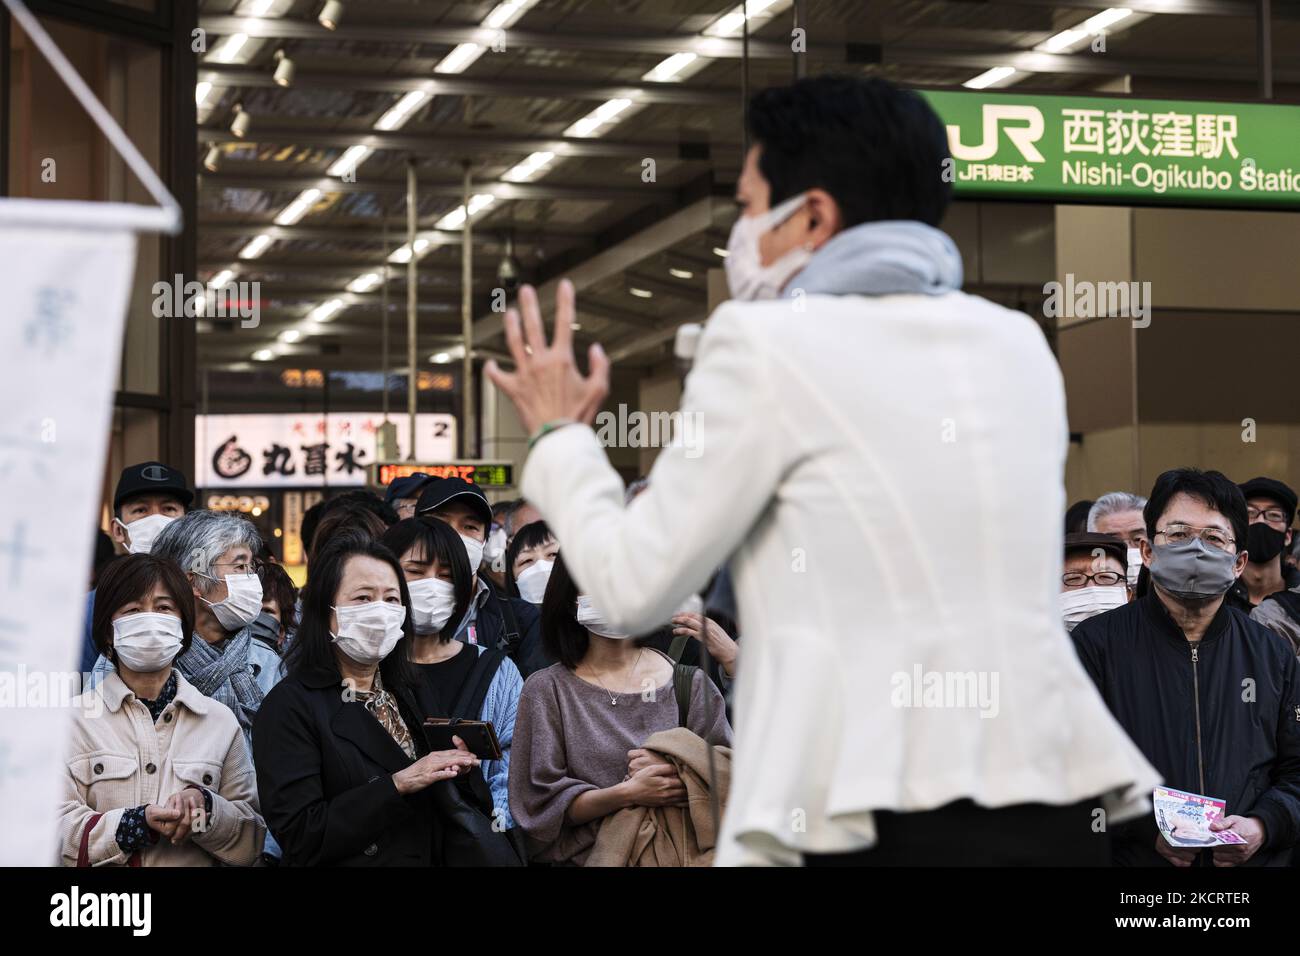 People wearing masks listen to a politician giving a stump speech in Tokyo, 30 Oct. (Photo by Yusuke Harada/NurPhoto) Stock Photo